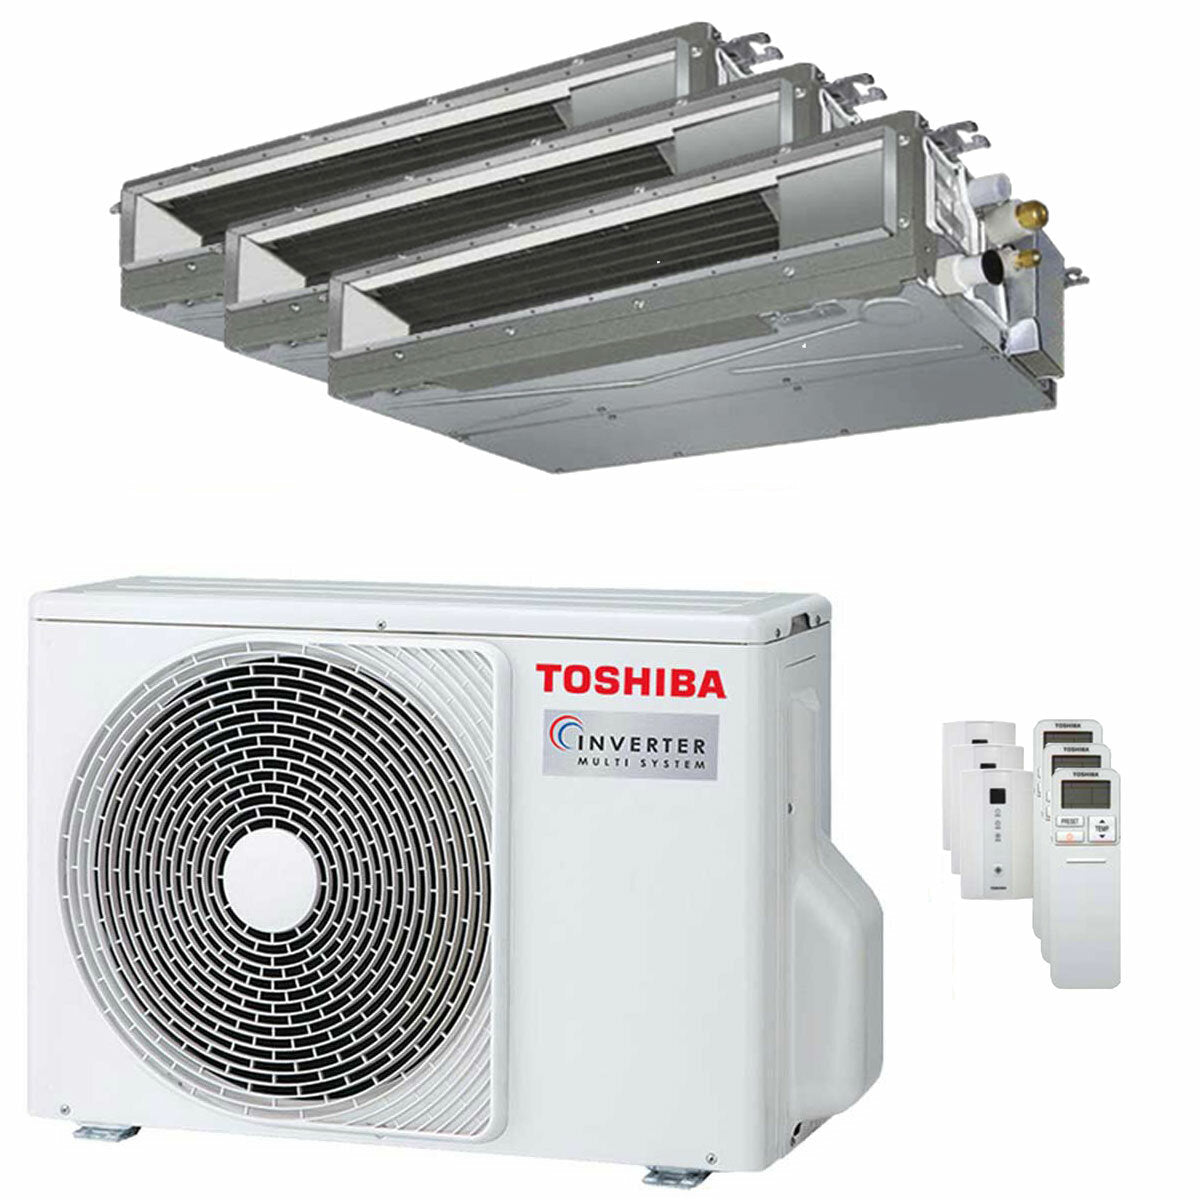 Toshiba ducted air conditioner U2 trial split 7000+9000+12000 BTU inverter A+++ external unit 5.2 kW